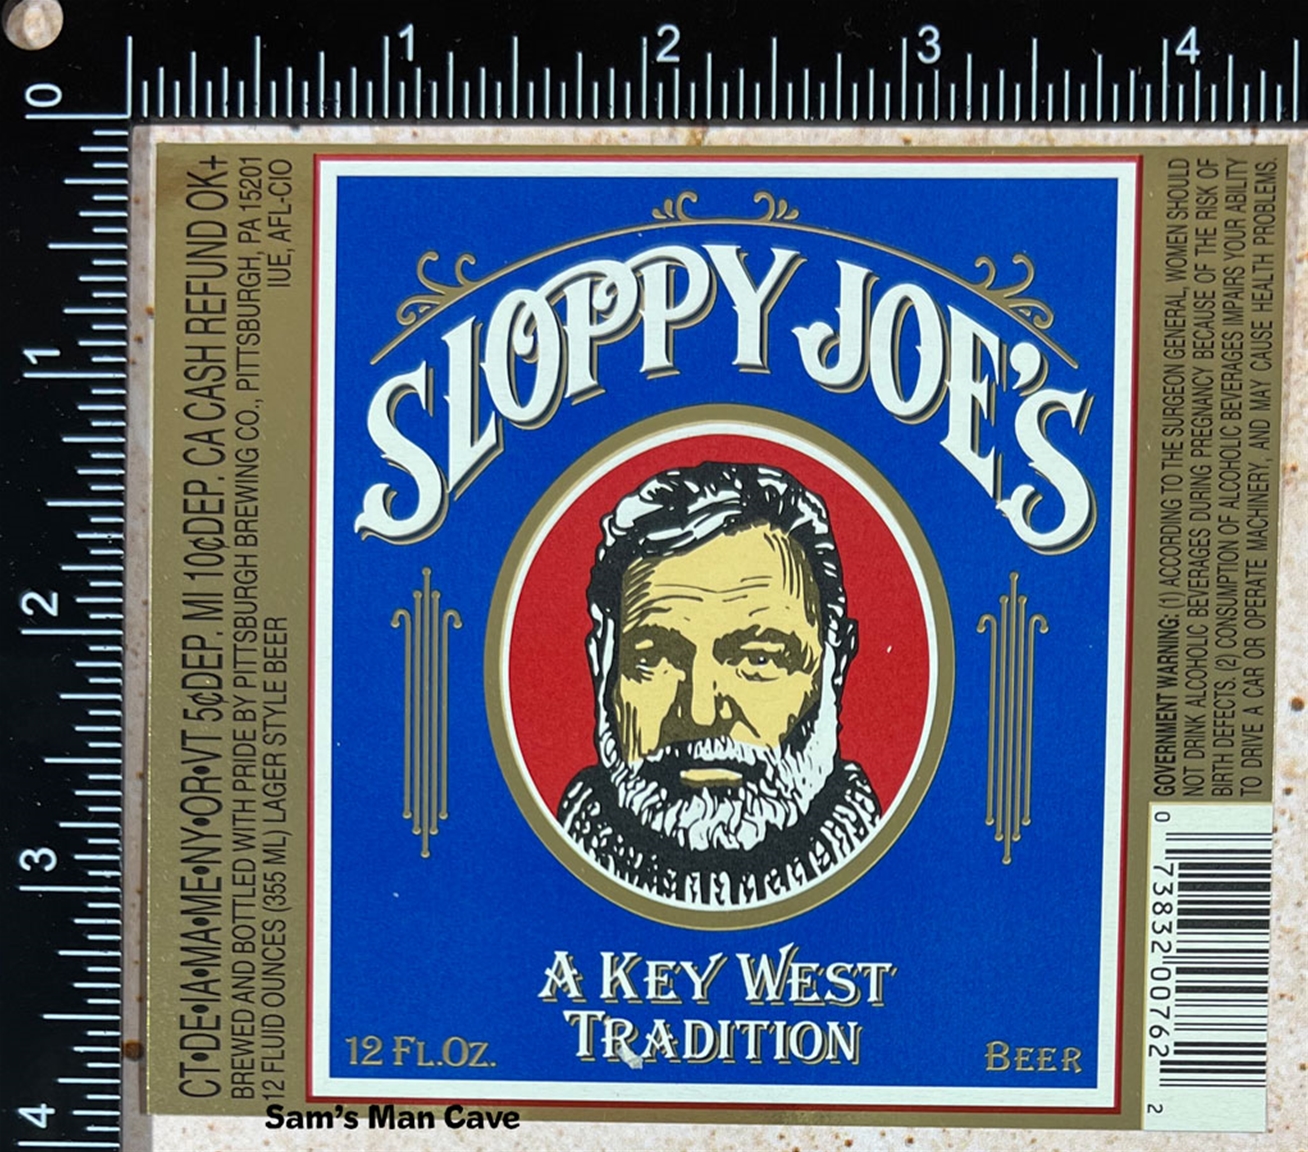 Sloppy Joe's Beer Label